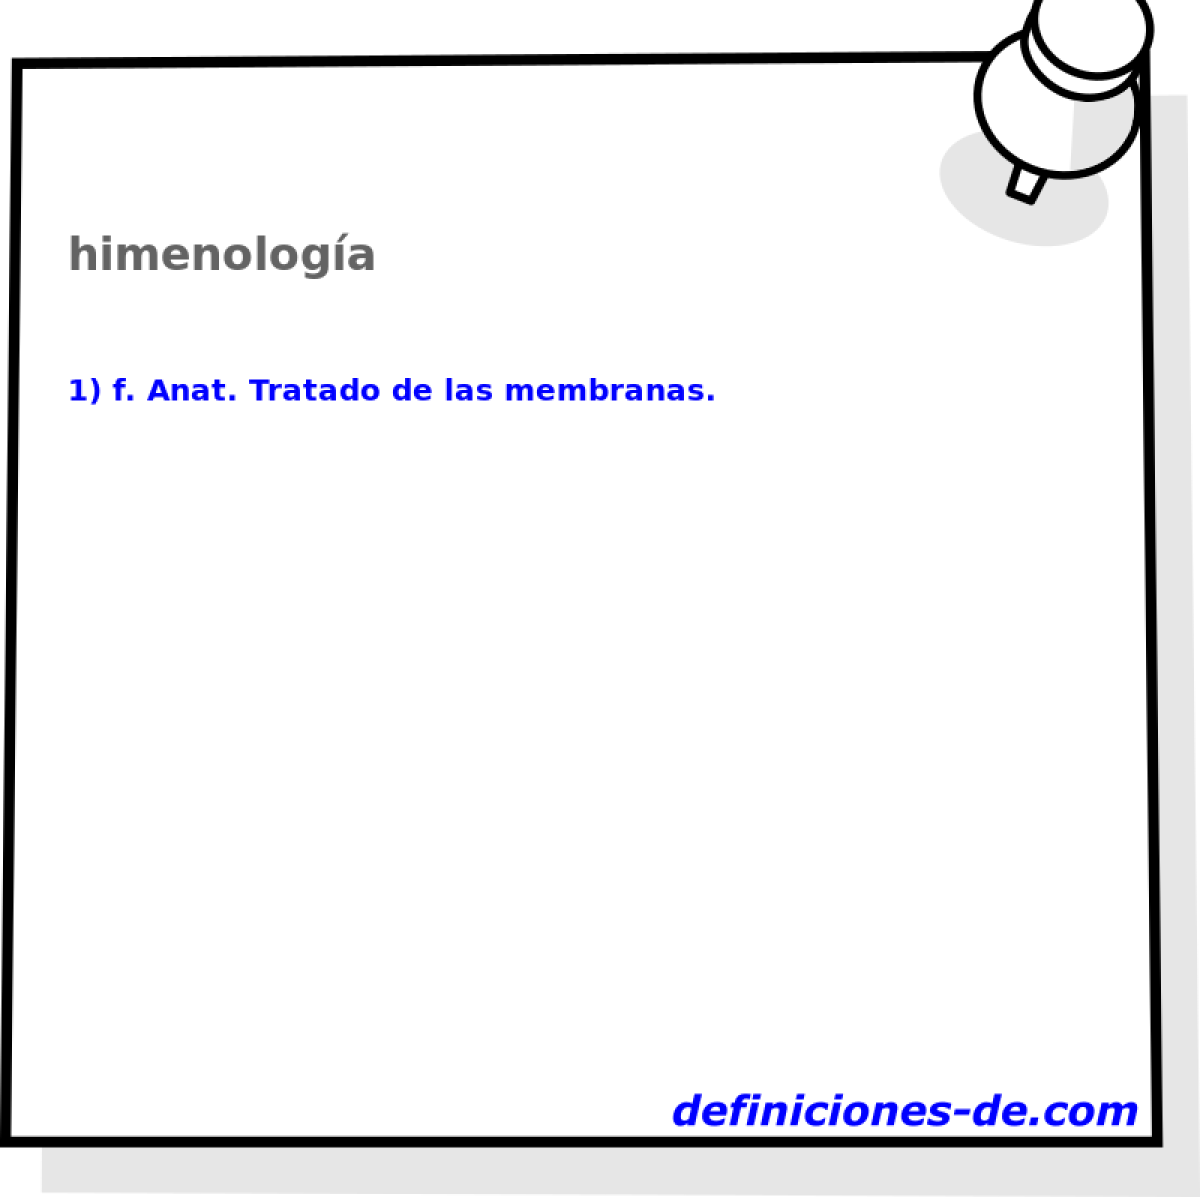 himenologa 